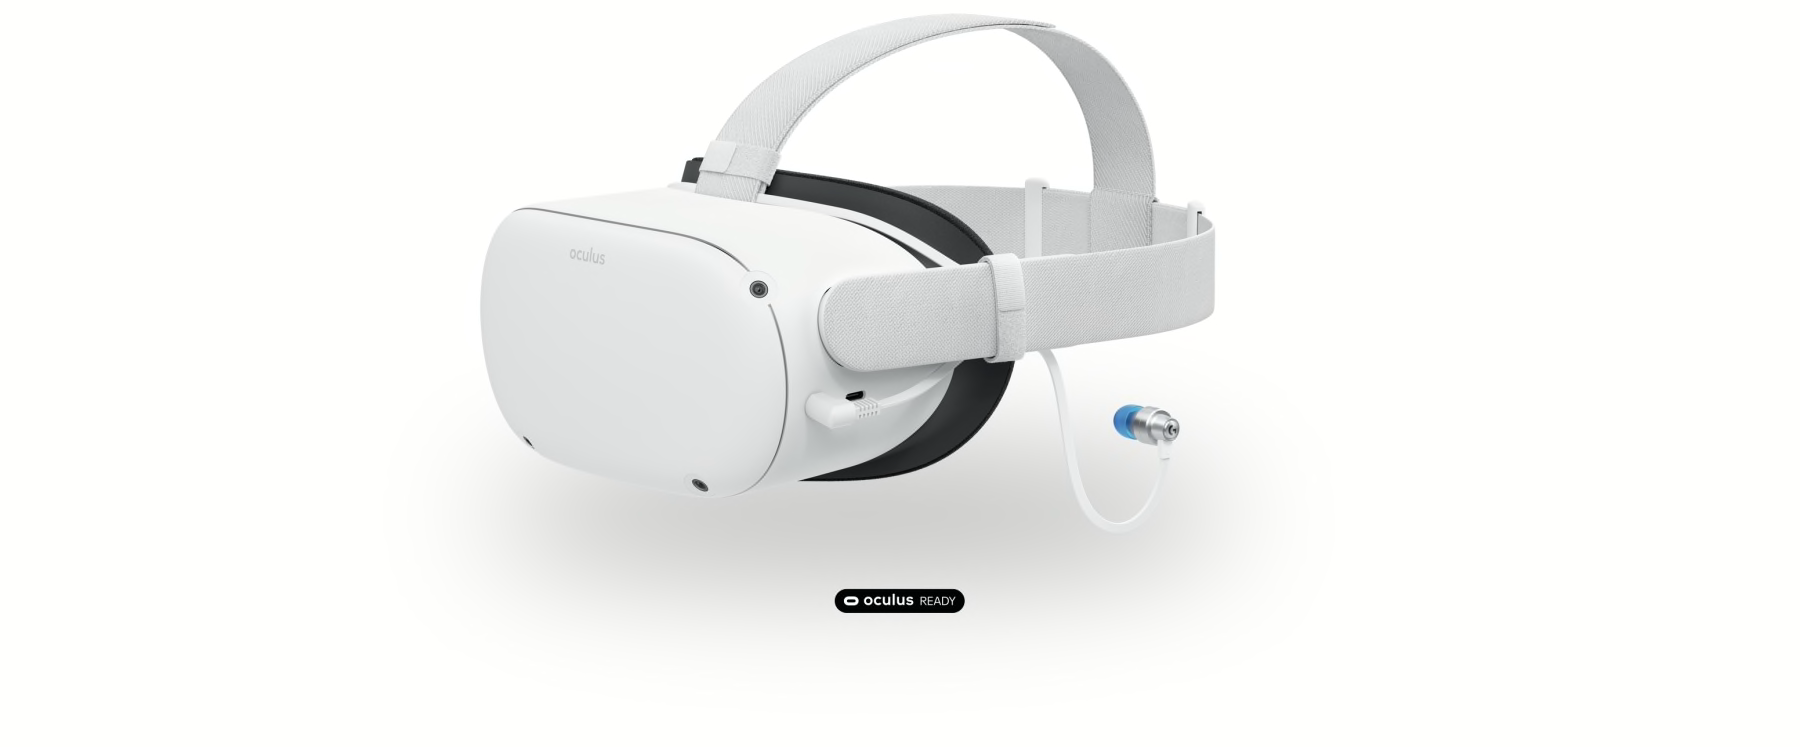 G333 VR Gaming Earphones for Oculus Quest 2 | Logitech G